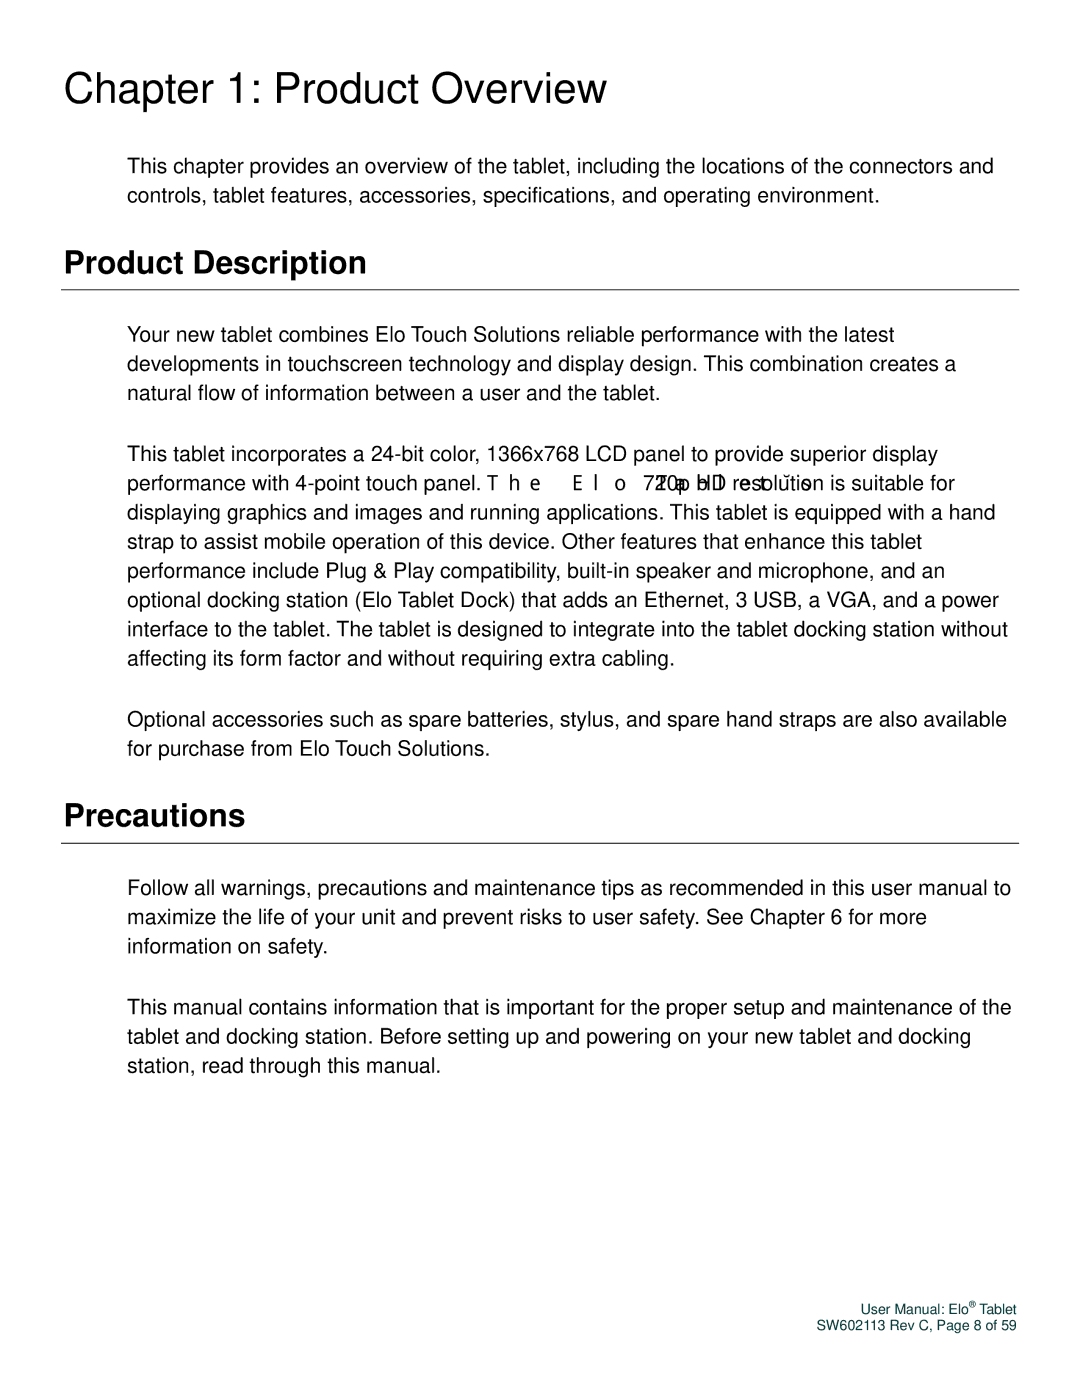 Elo TouchSystems SW602113 manual Product Description, Precautions 